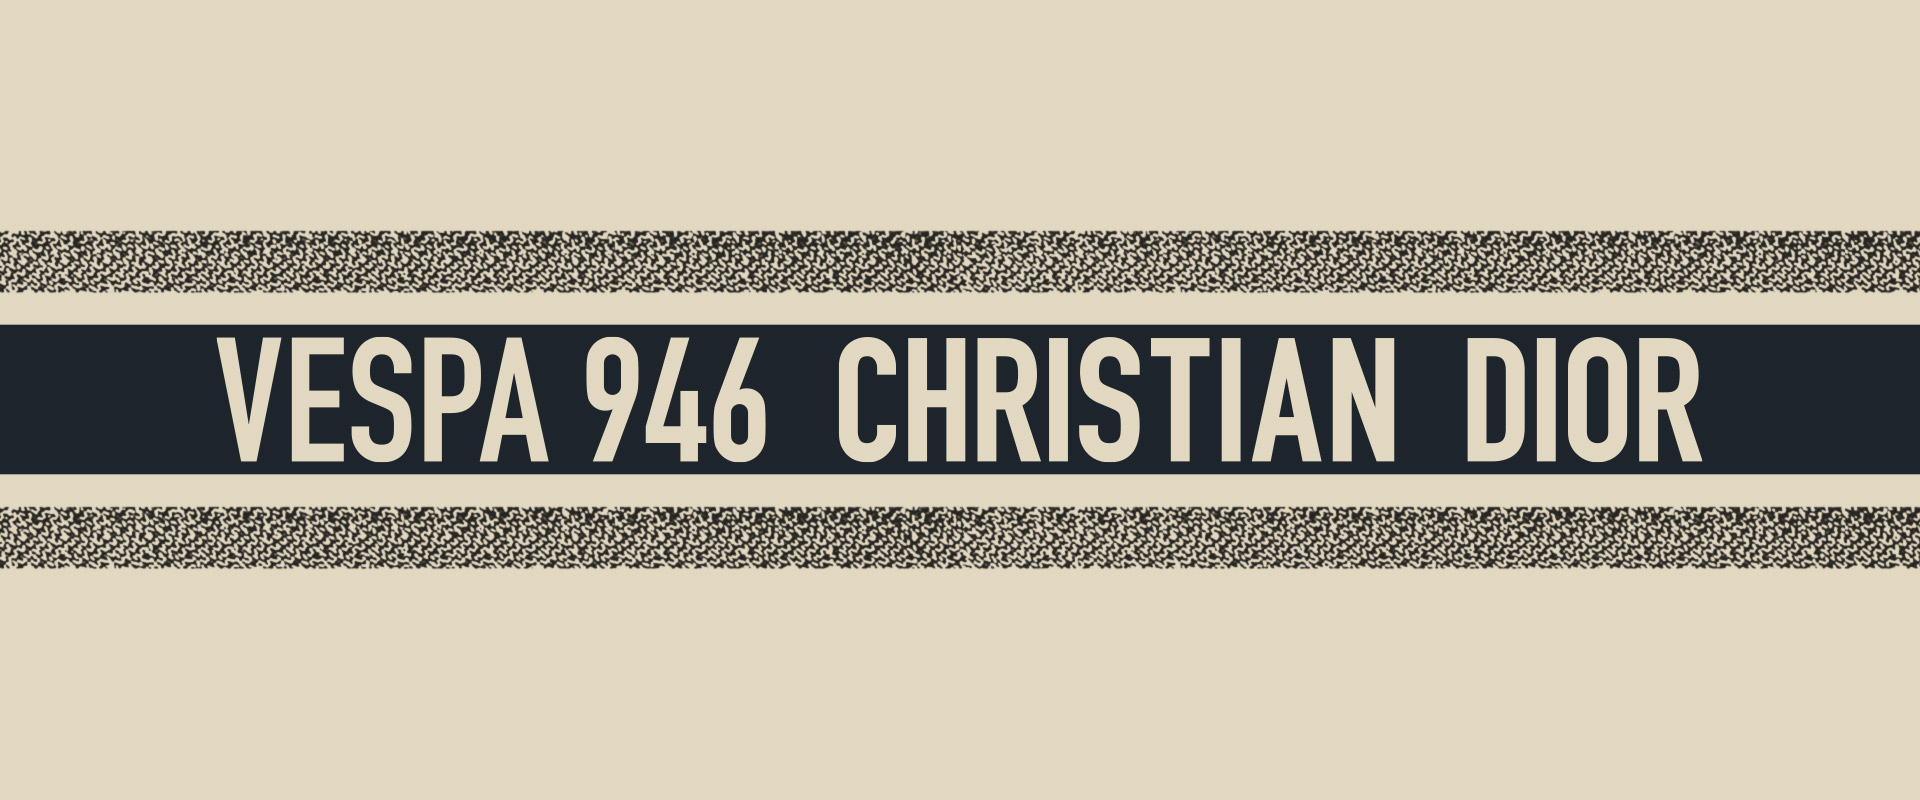 Vespa 946 christian dior